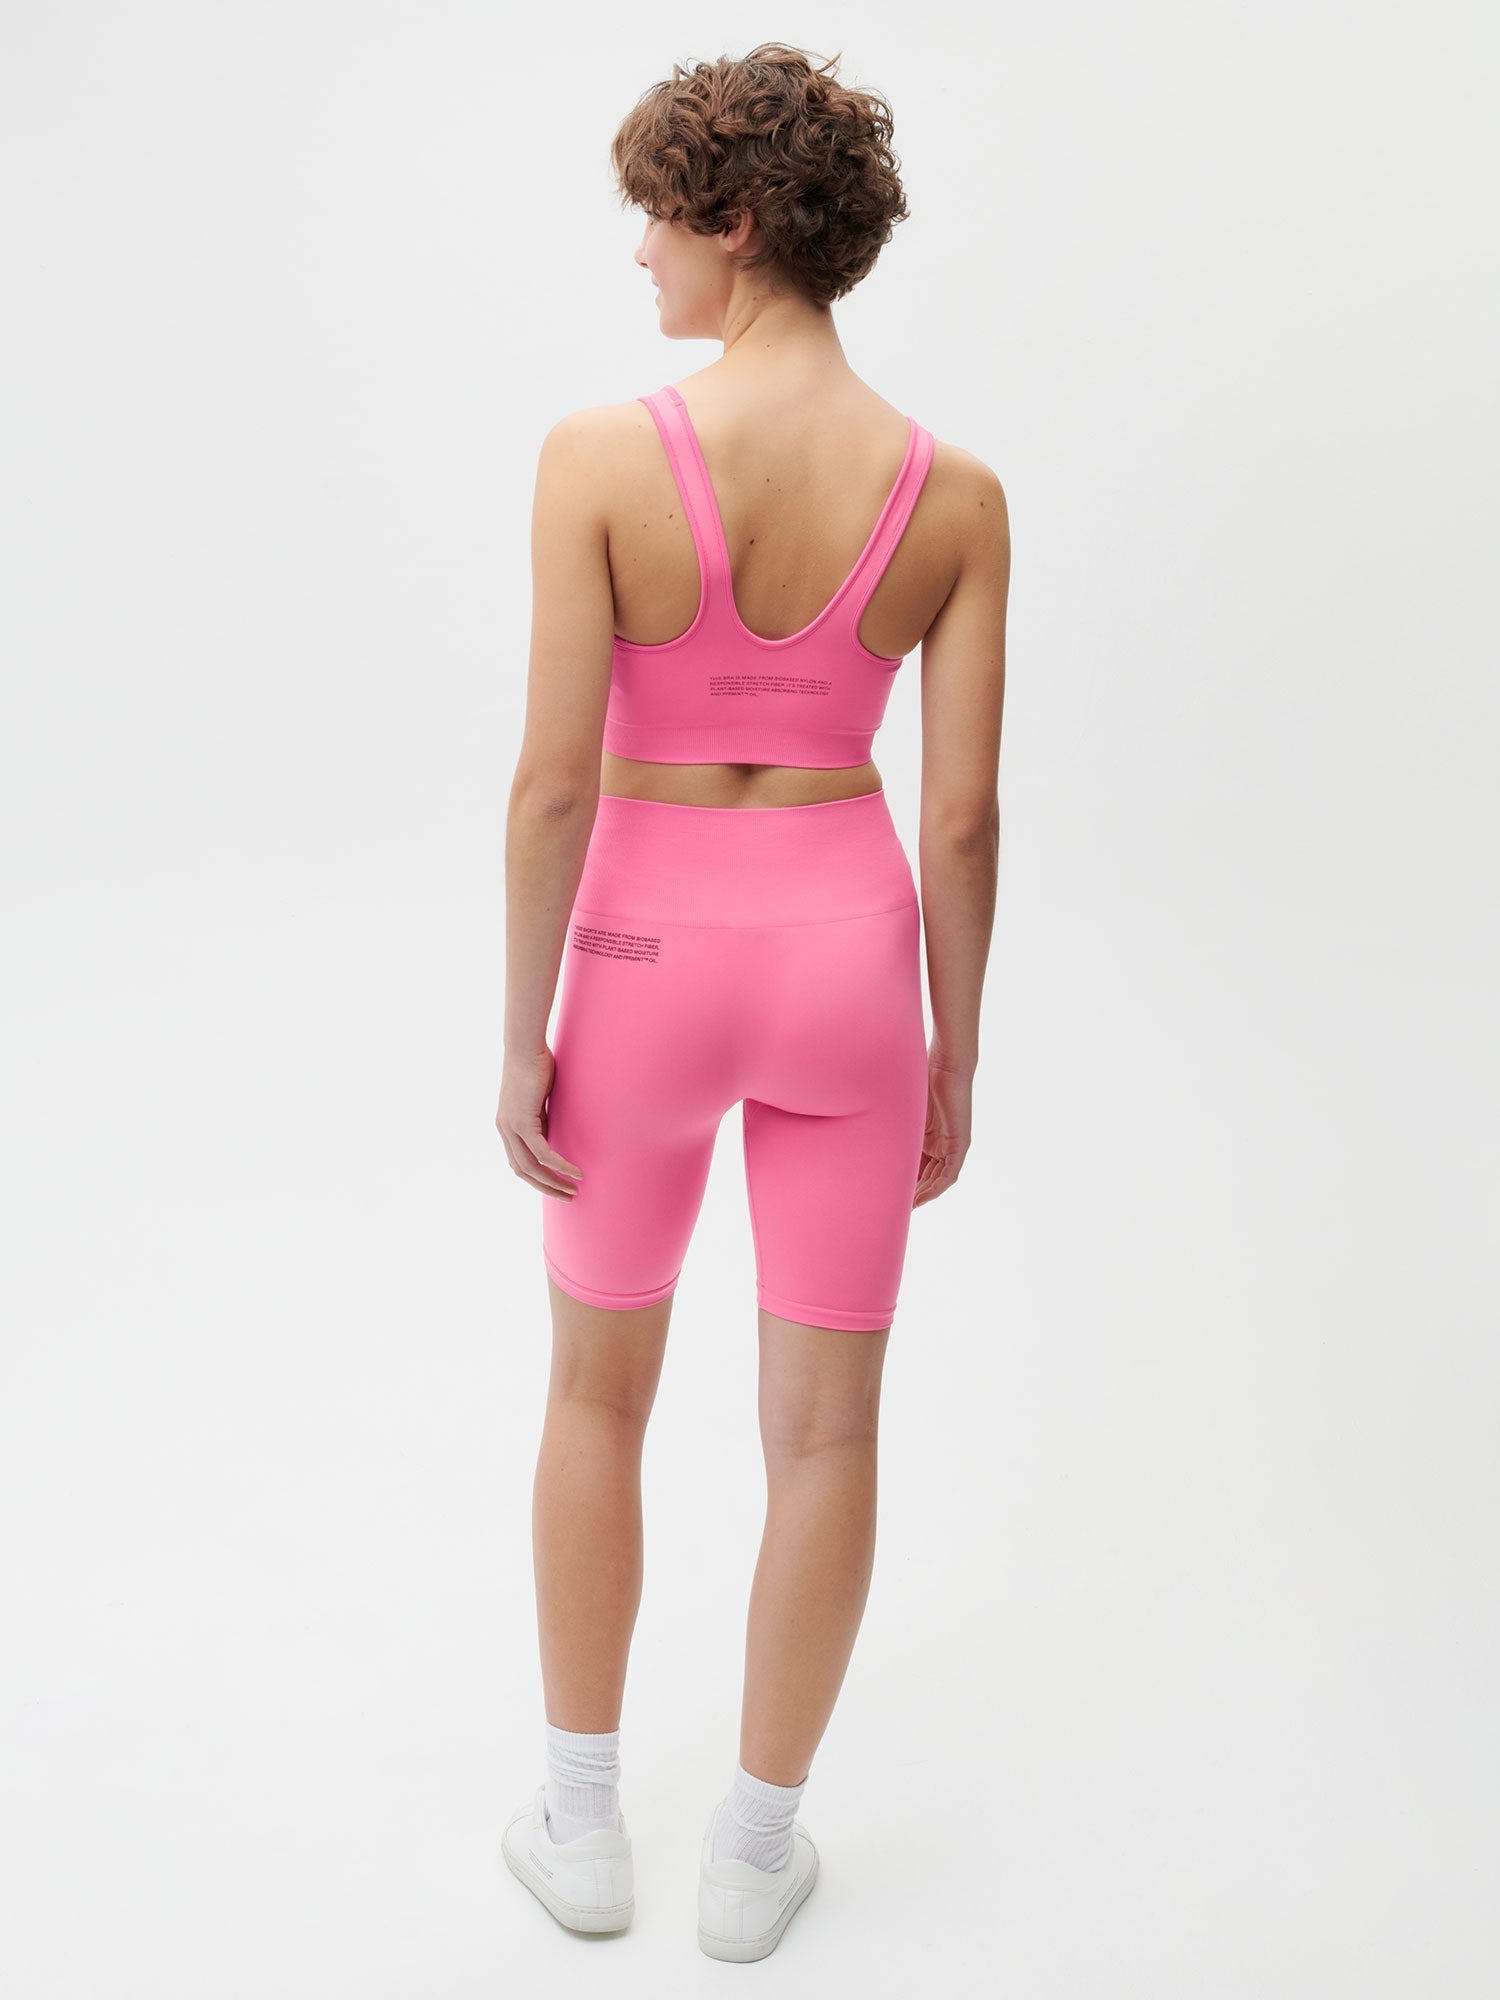 Activewear Womens Shorts Watermelon Pink 